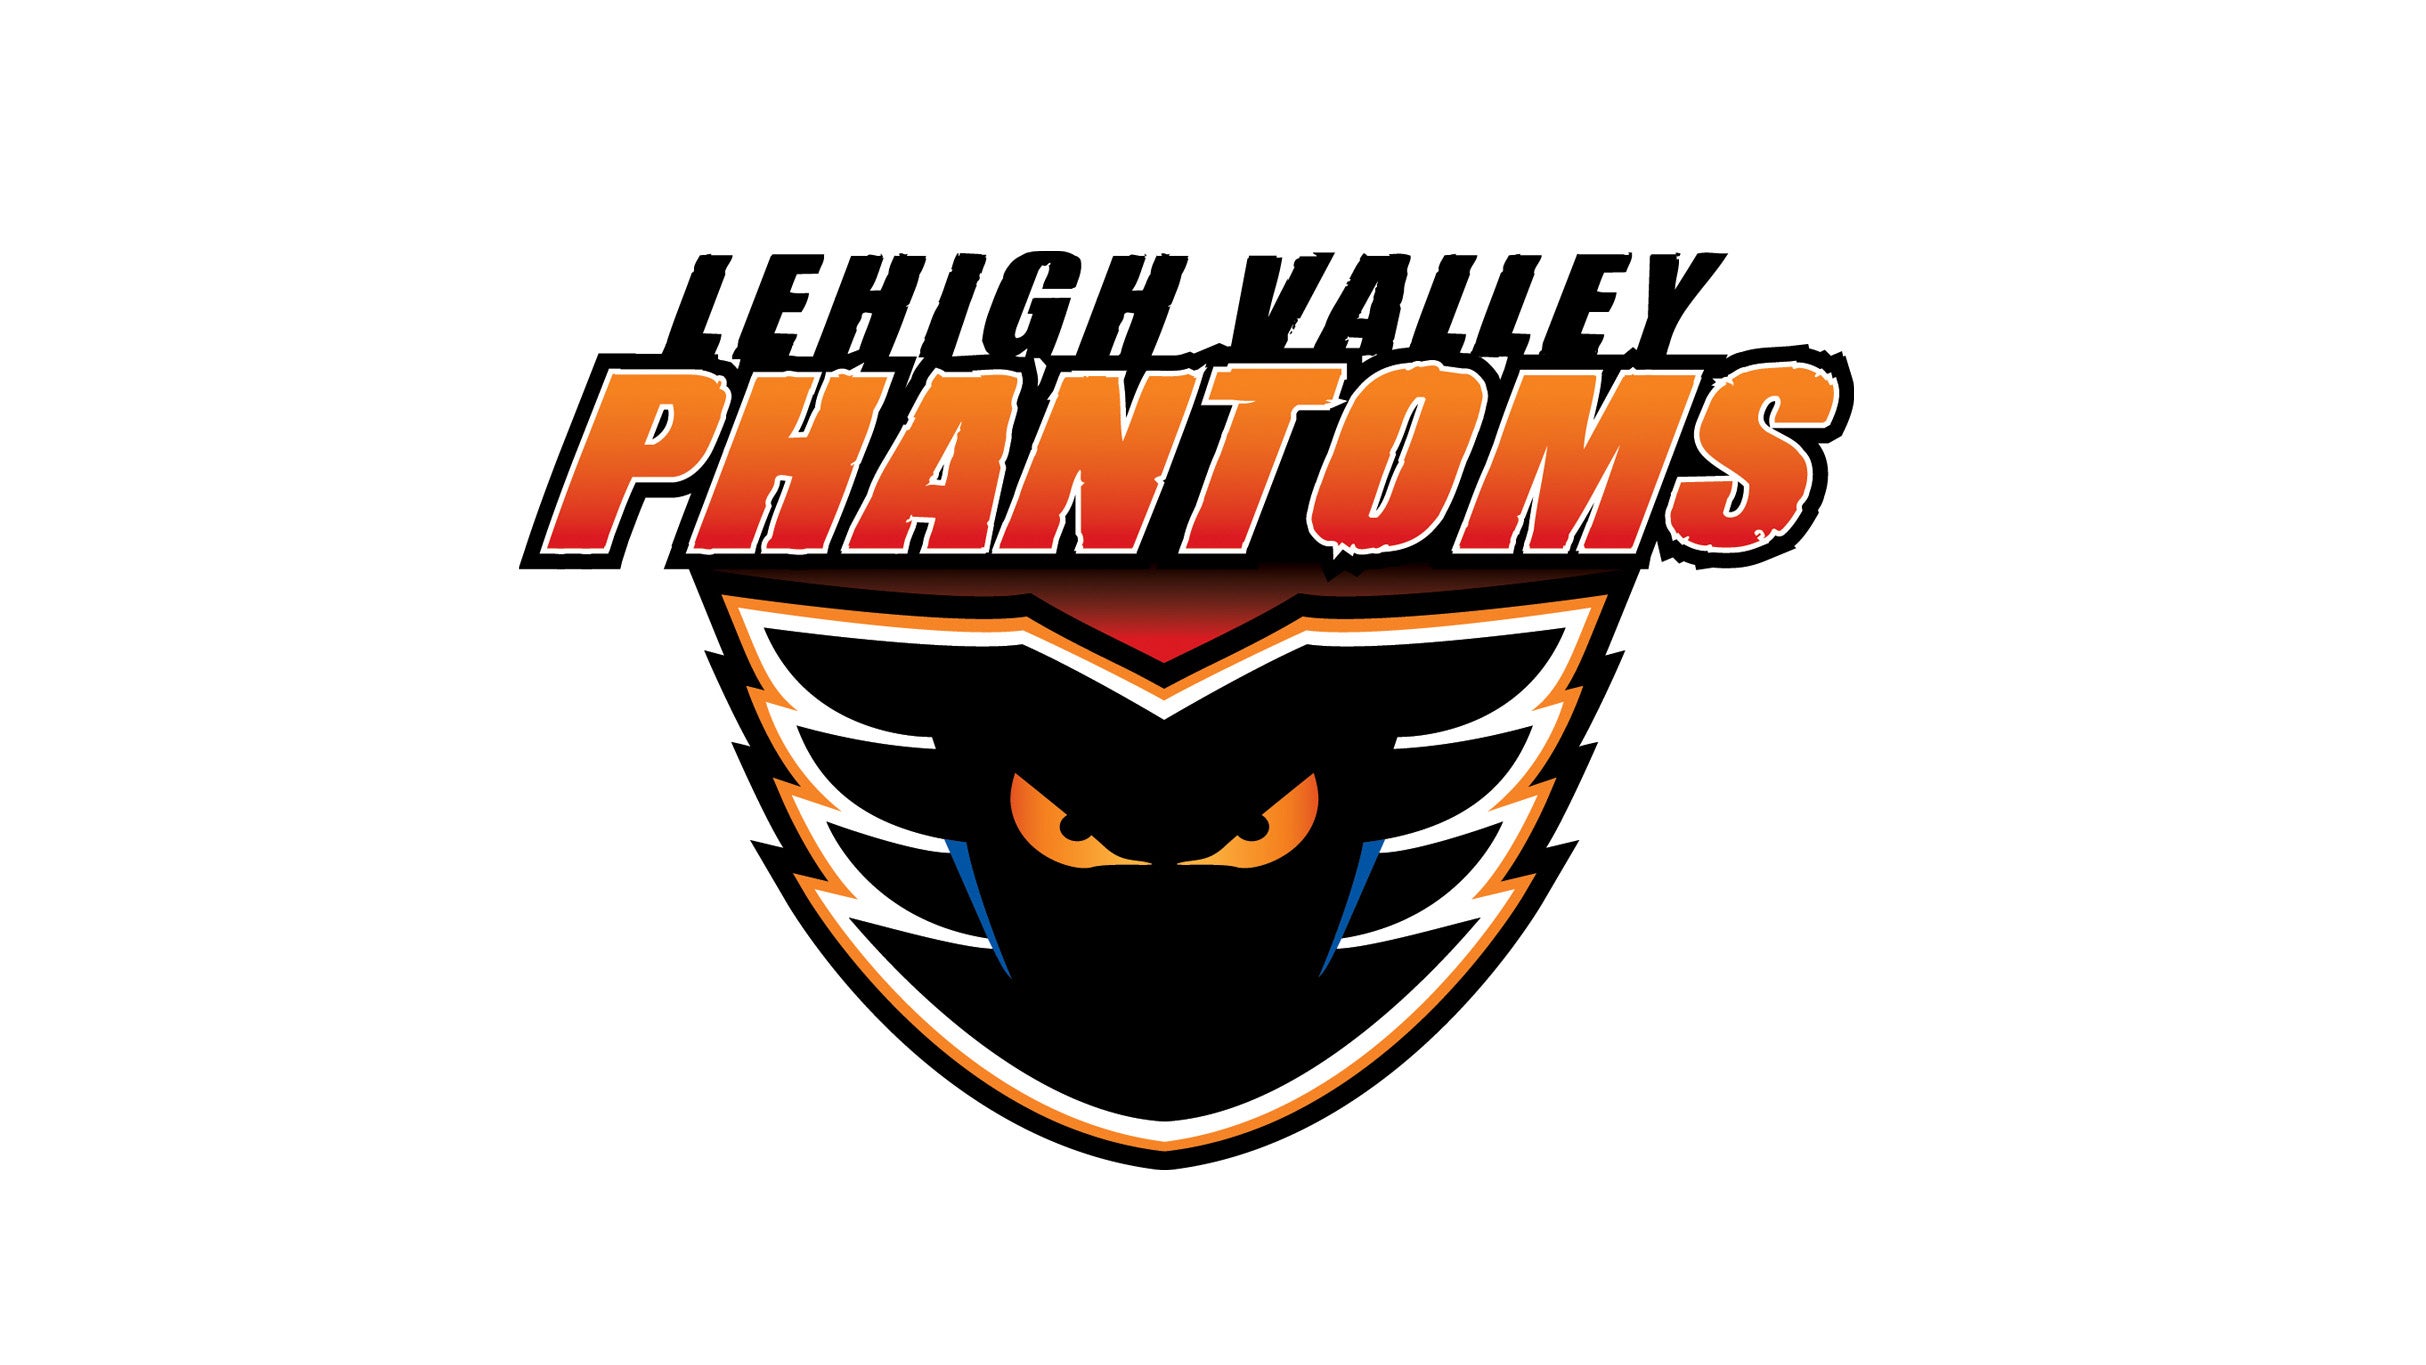 Lehigh Valley Phantoms vs. Charlotte Checkers at PPL Center